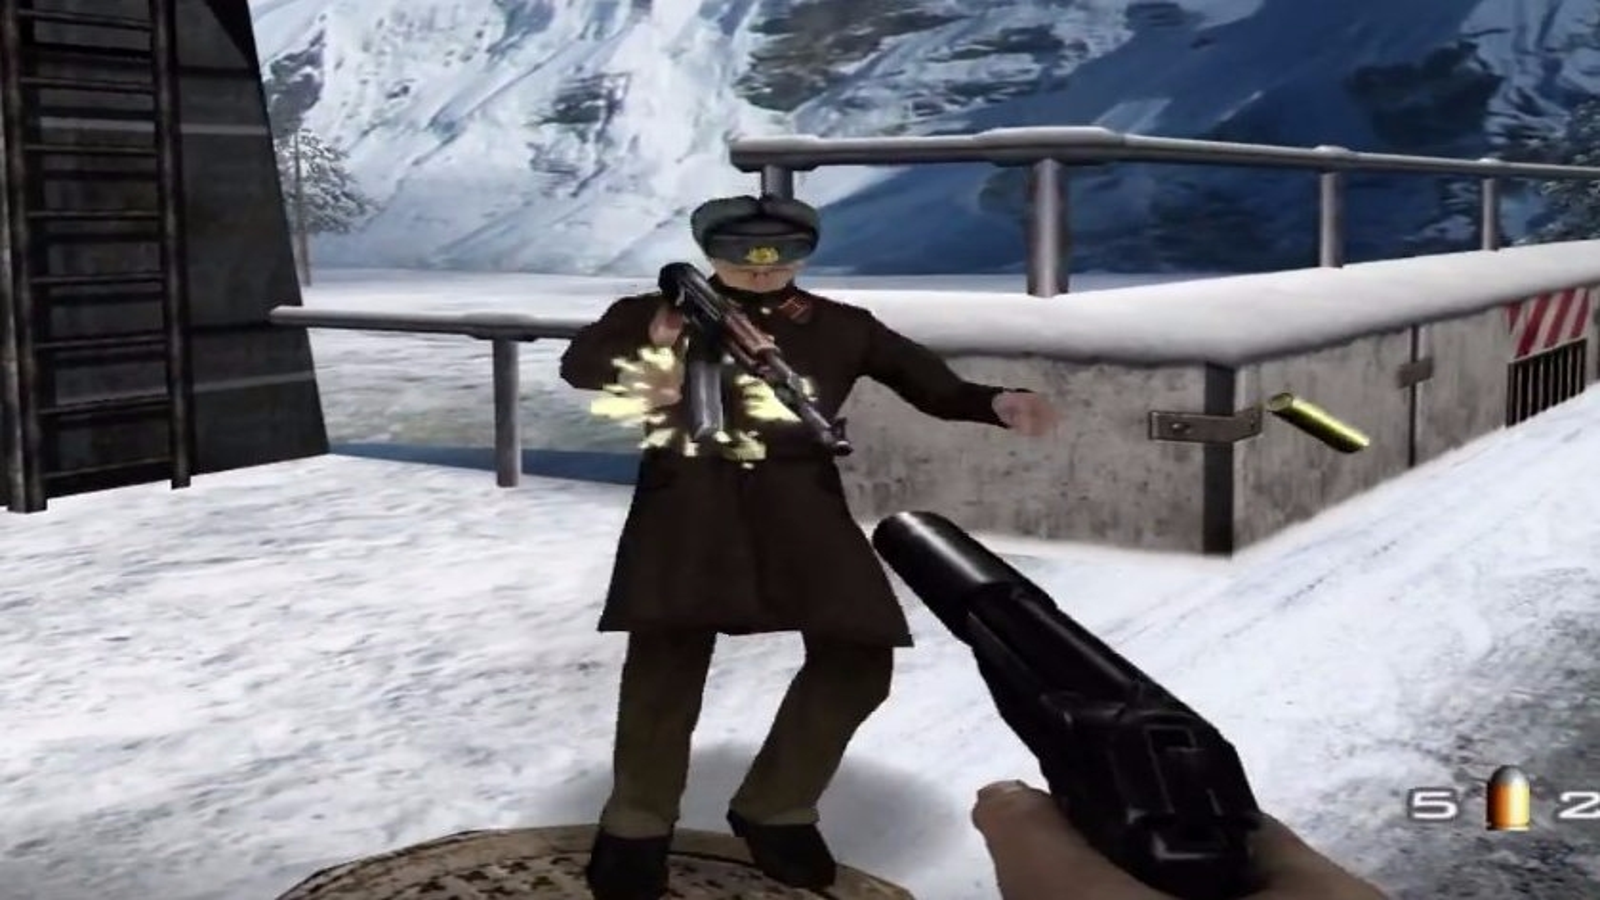 GoldenEye 007's canceled Xbox 360 remake is now playable online - Polygon